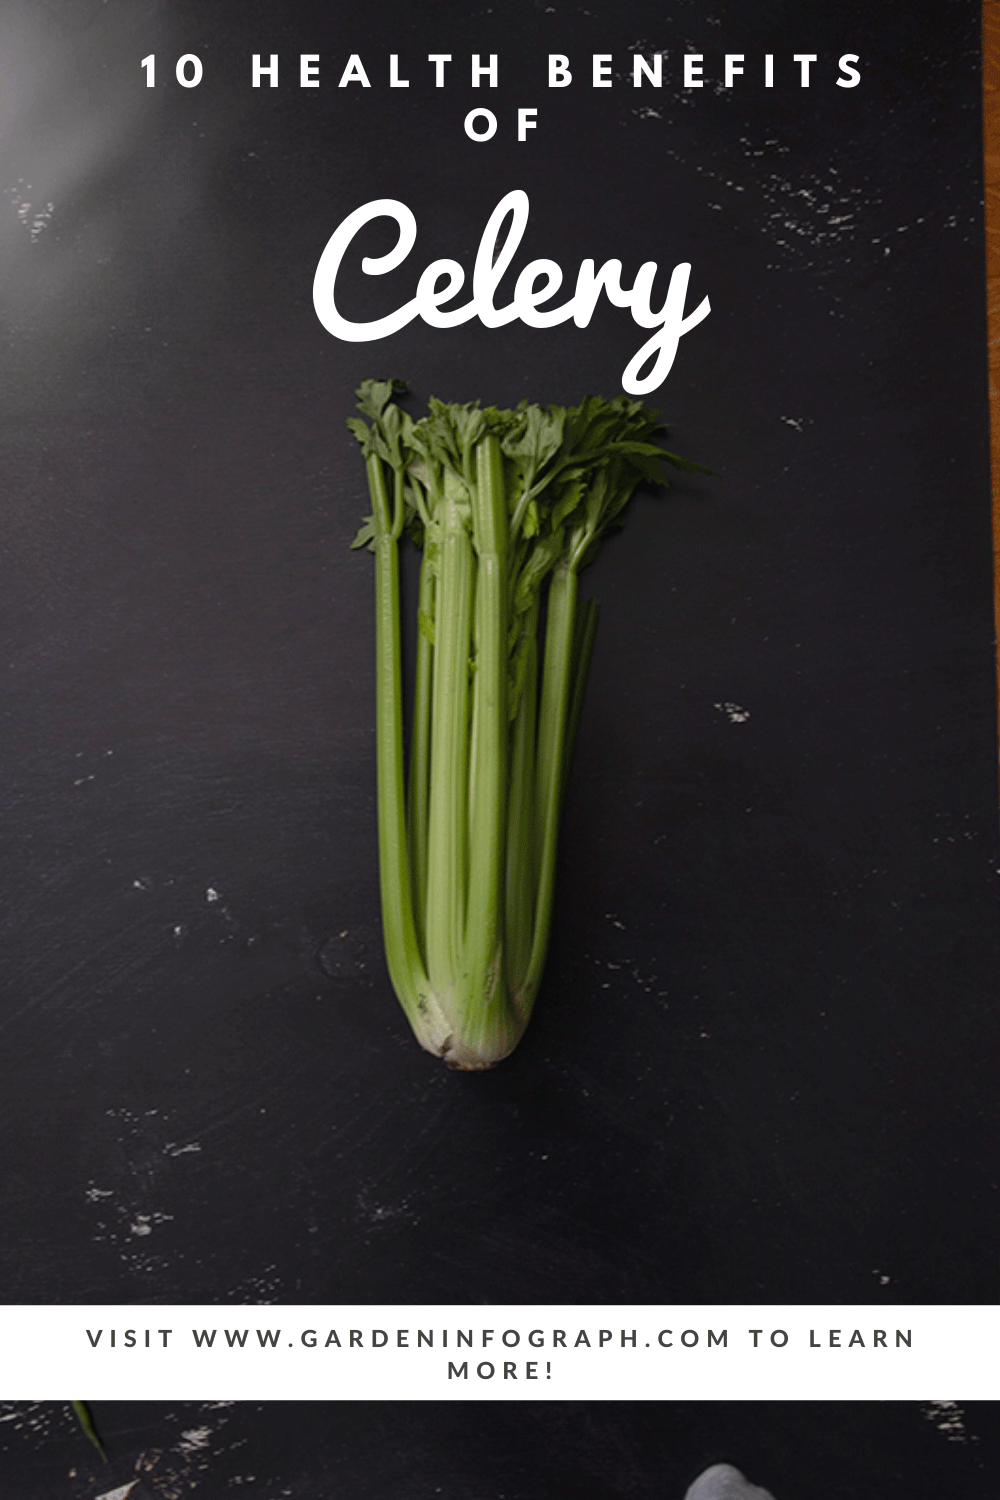 health benefits of celery